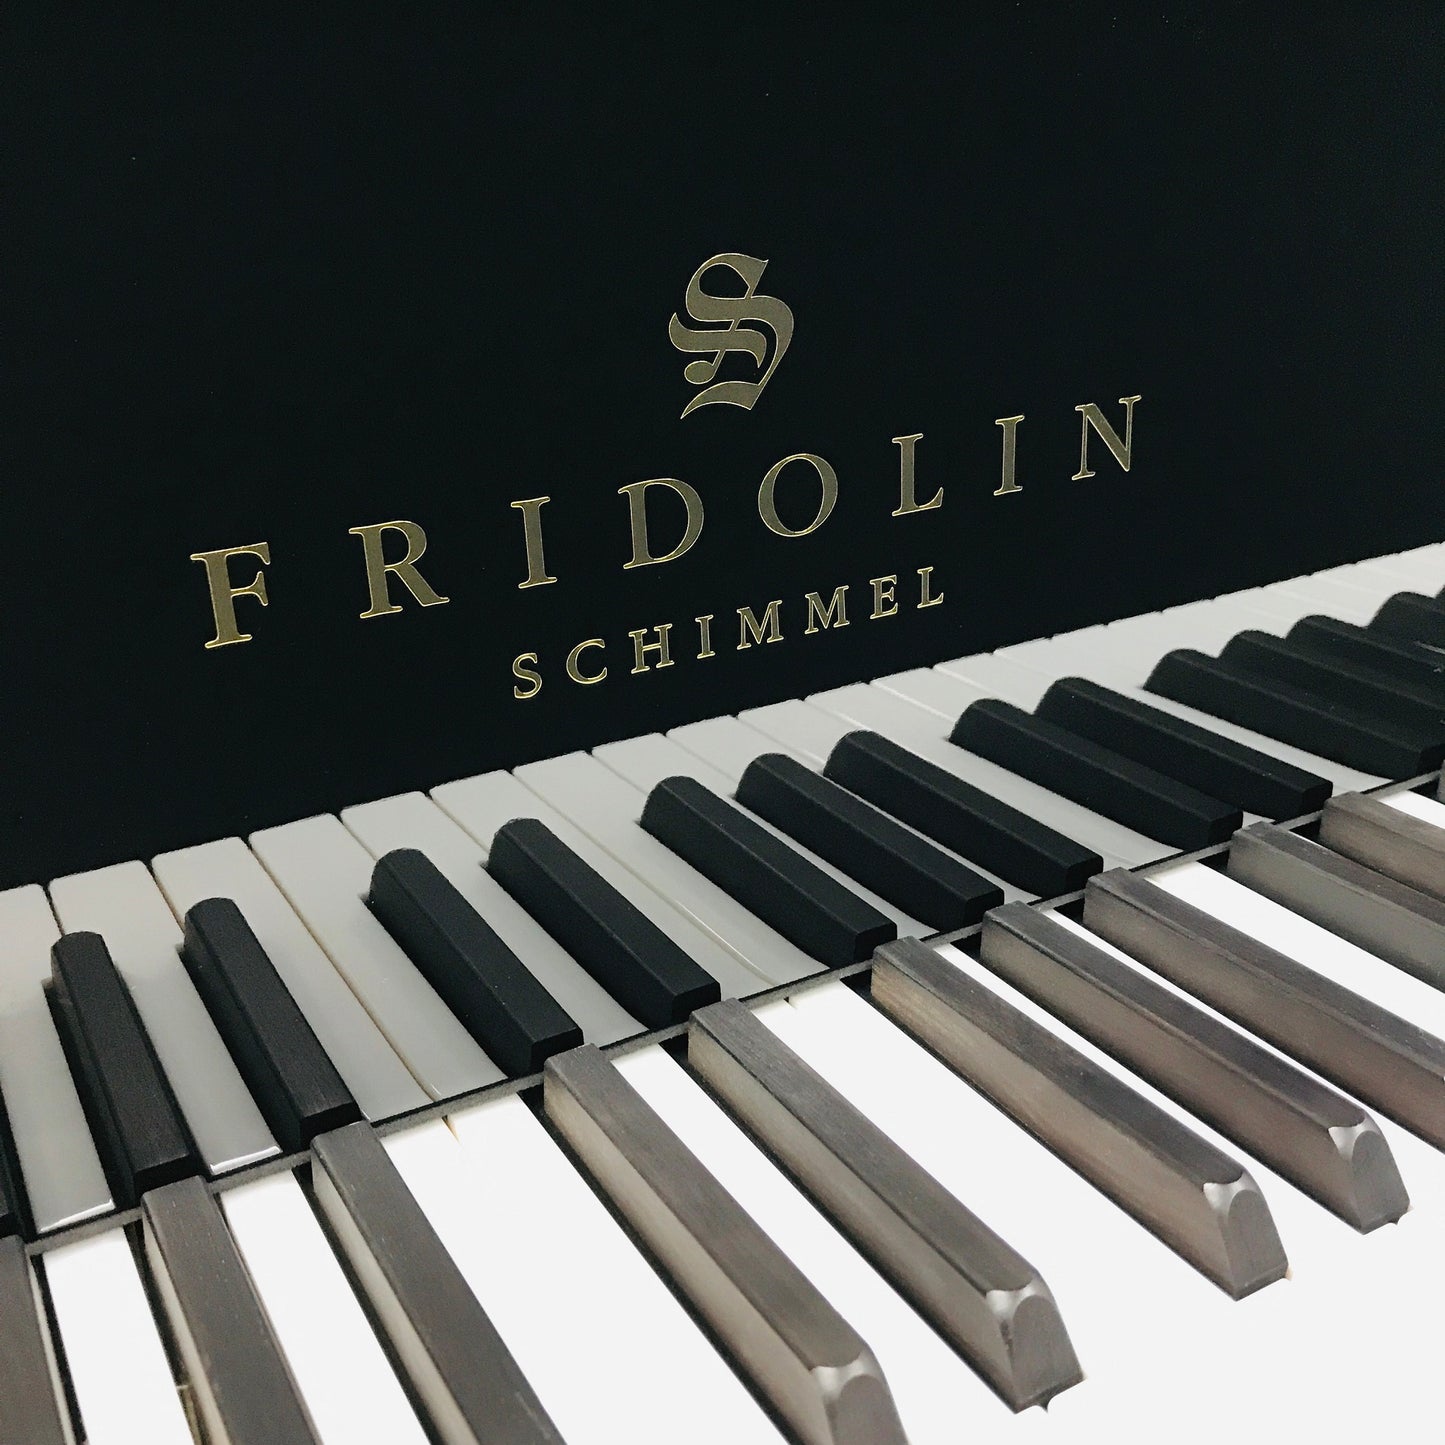 Schimmel Fridolin F182 Grand Piano